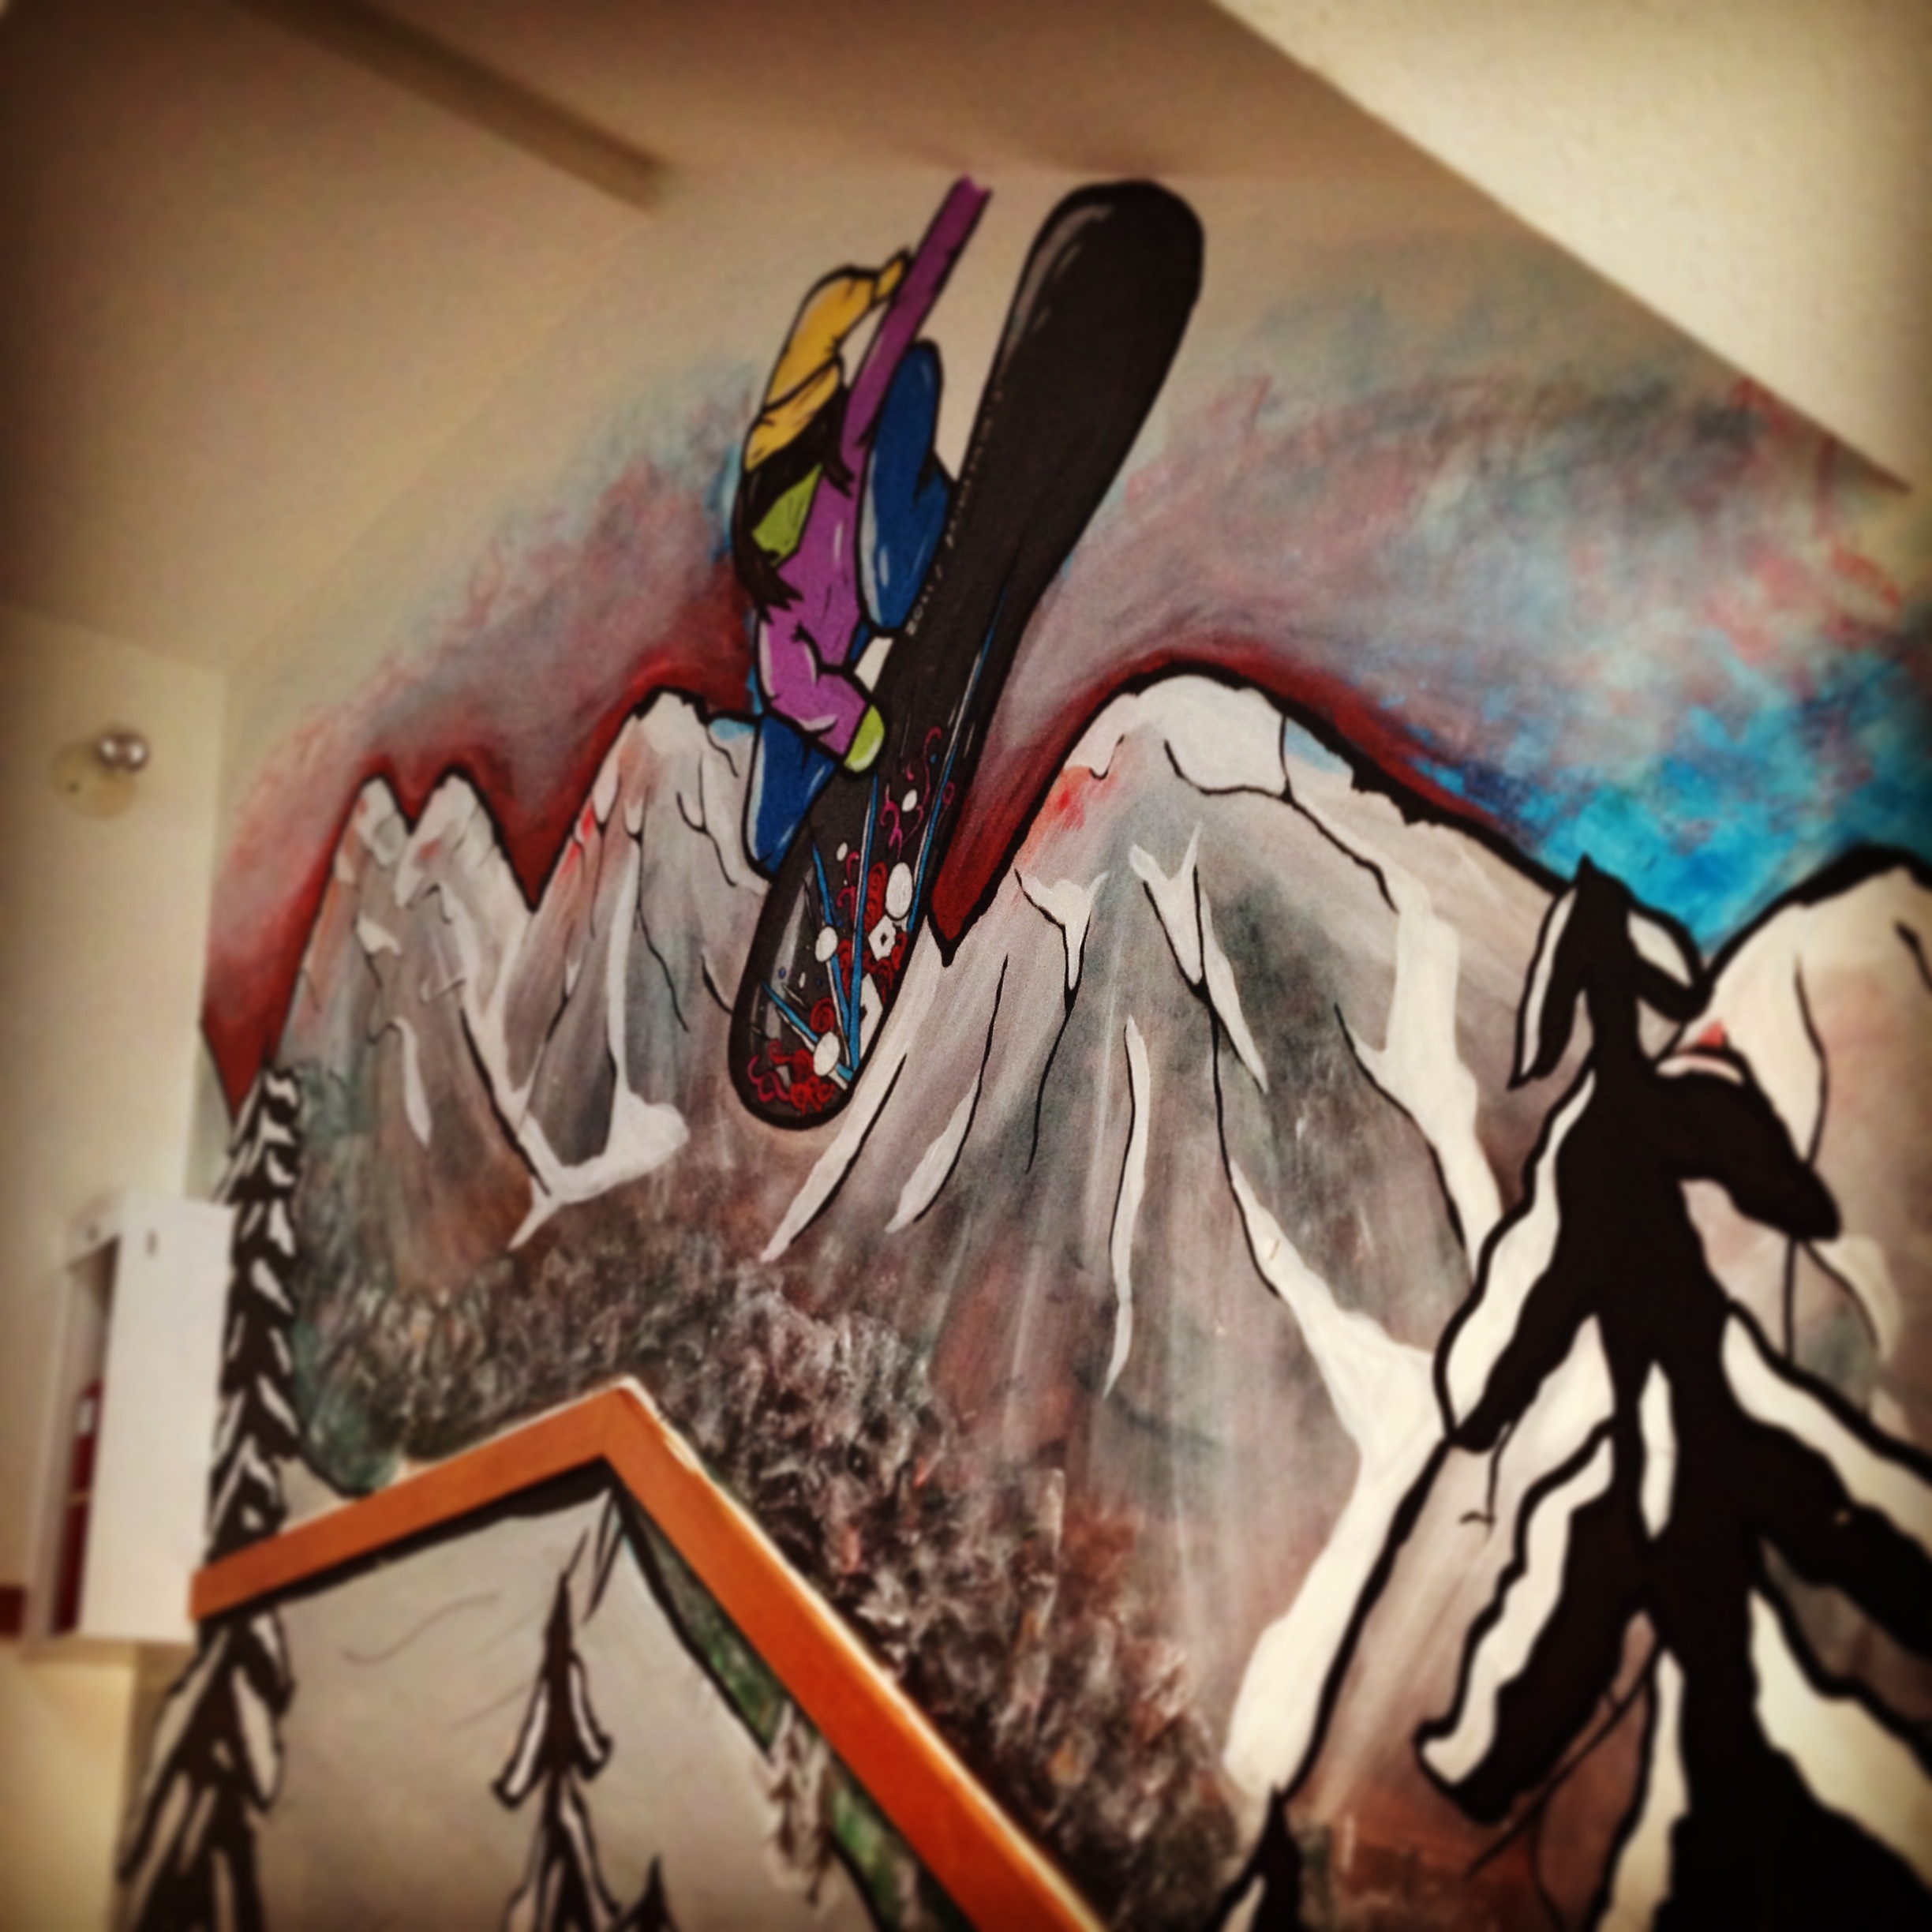 Snowboarding art coats the walls at Samesun Hostel in Banff, AB